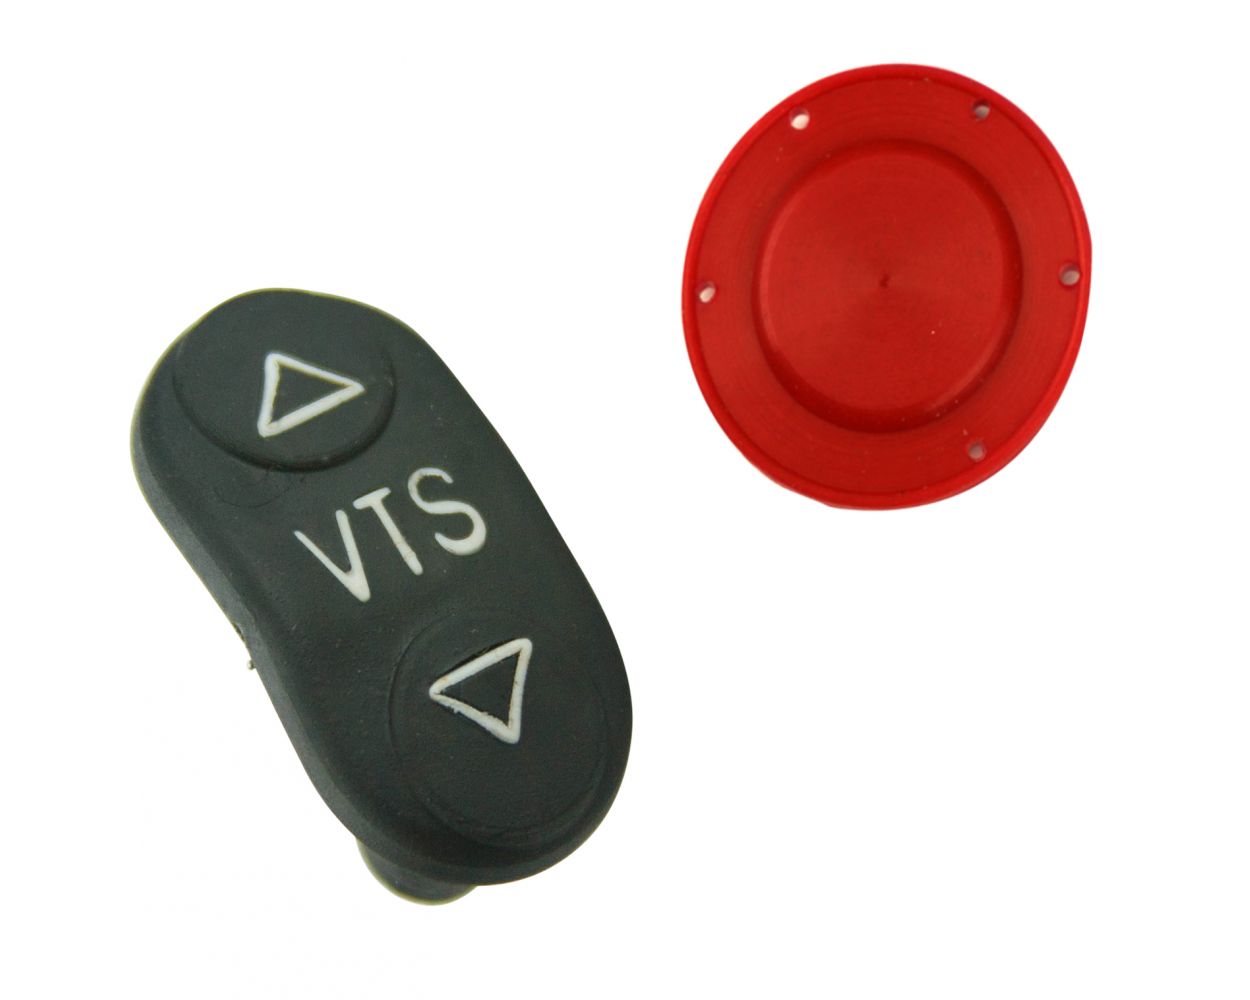 New VTS Switch Button Fits Sea-Doo RX DI 951cc 2000 2001 2002 2003 